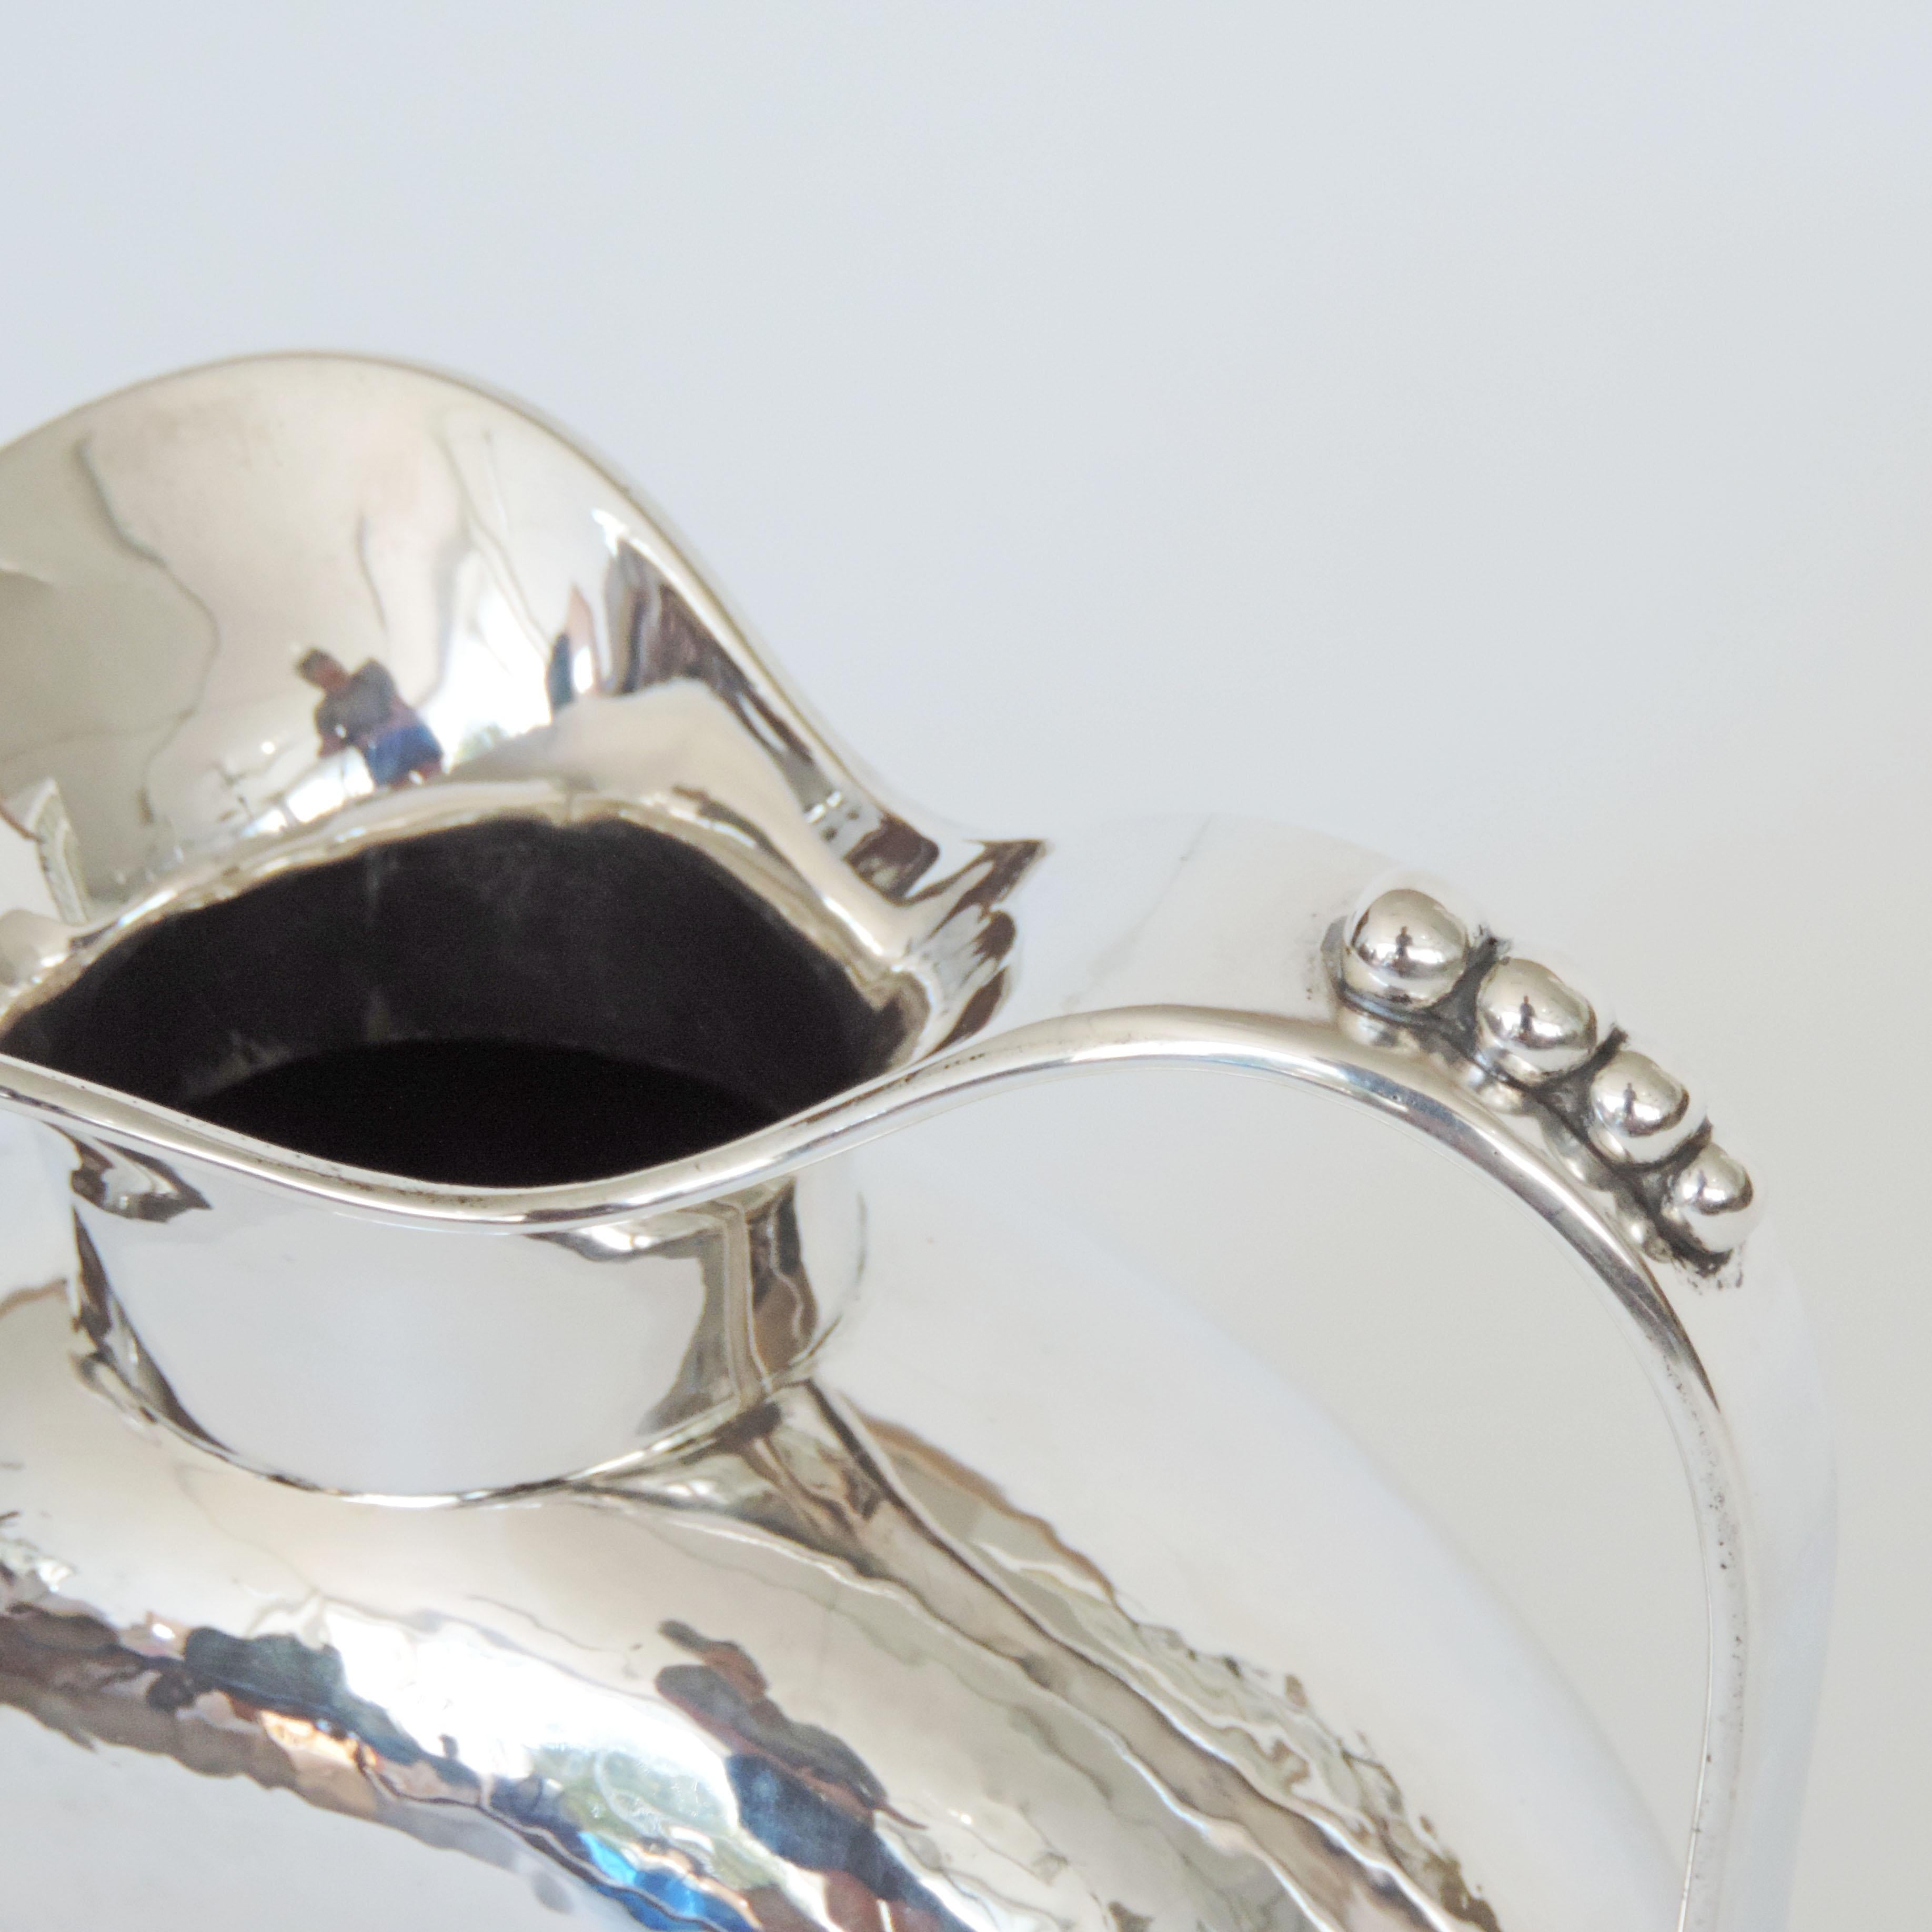 Italian 1930s Art Deco hammered silver jug
Signed 800 and Undecipherable Hallmark.